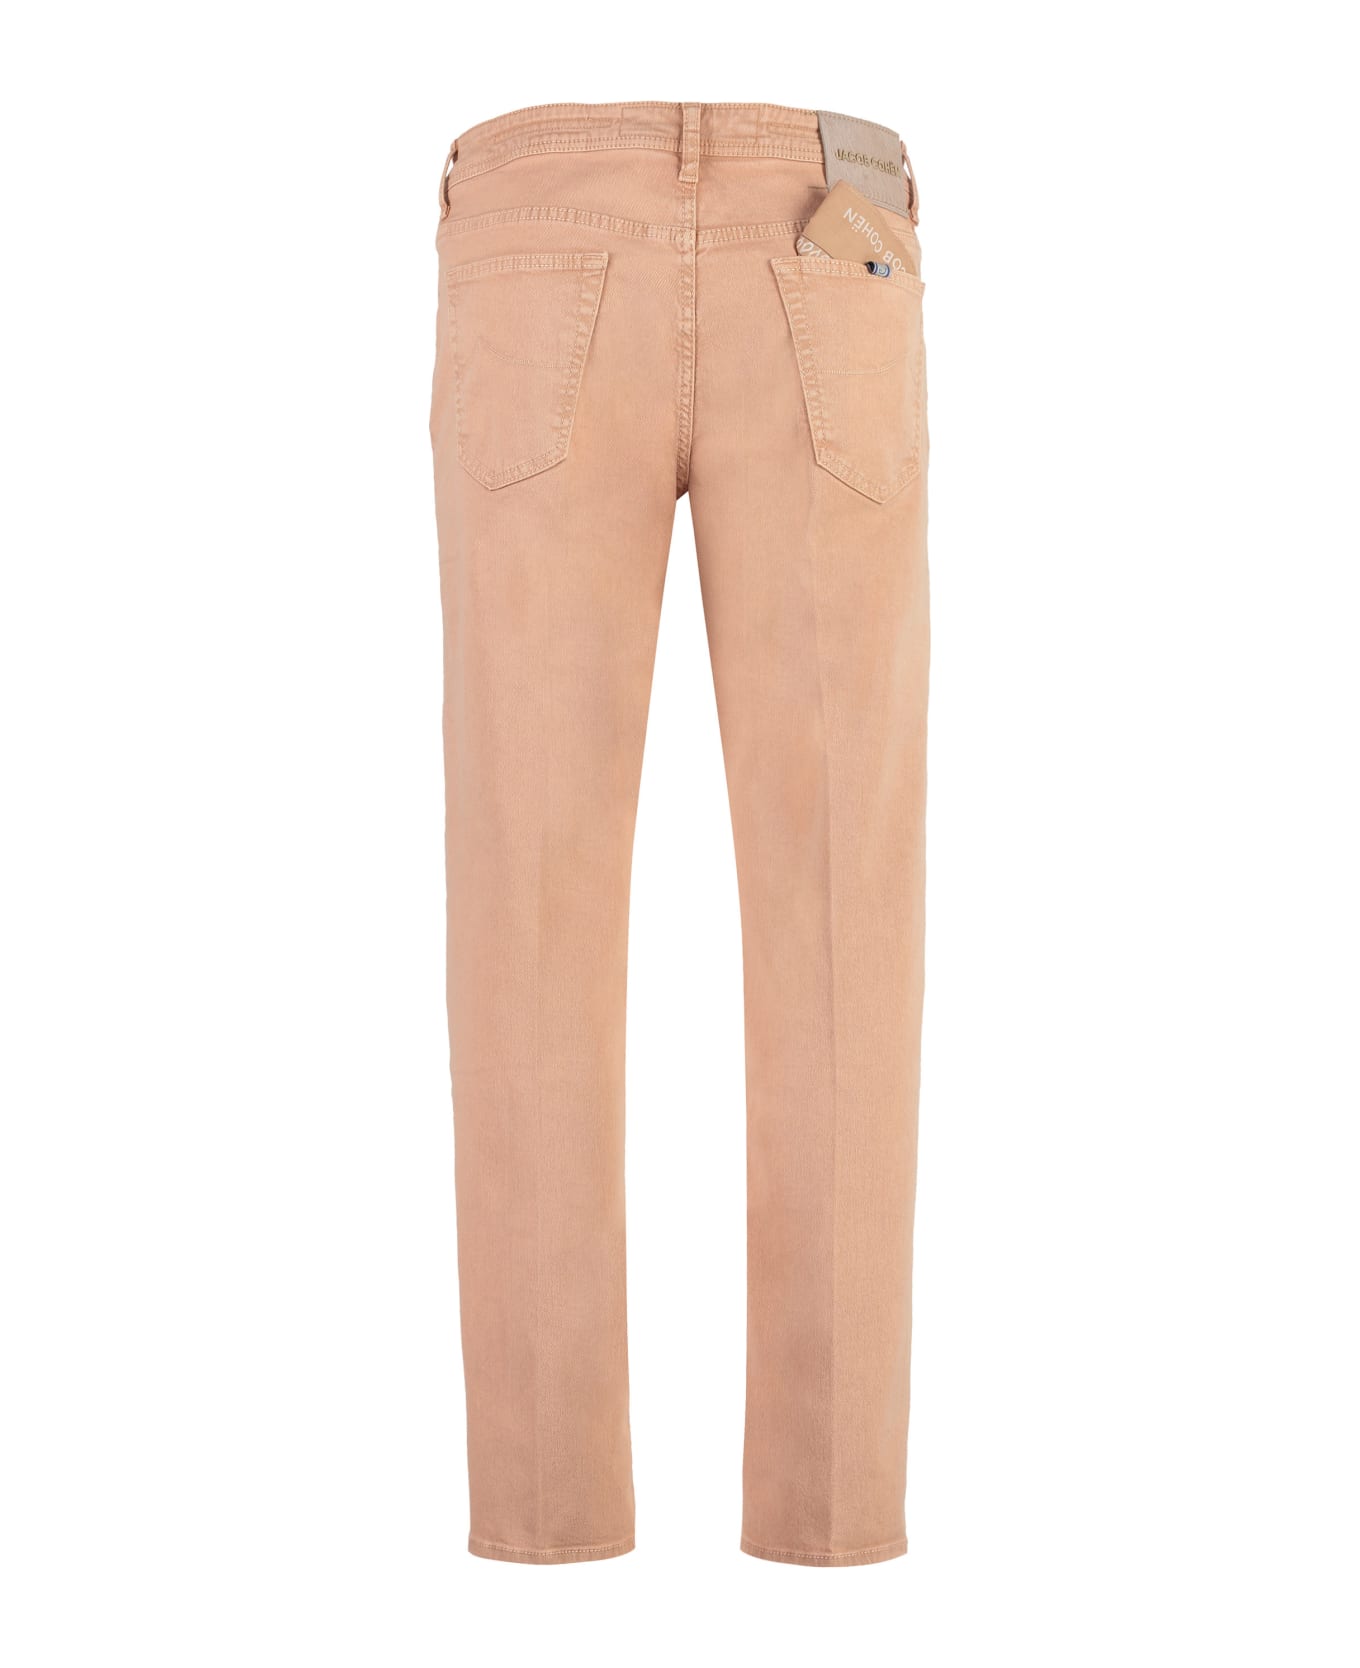 Jacob Cohen 5-pocket Slim Fit Jeans - Salmon pink ボトムス